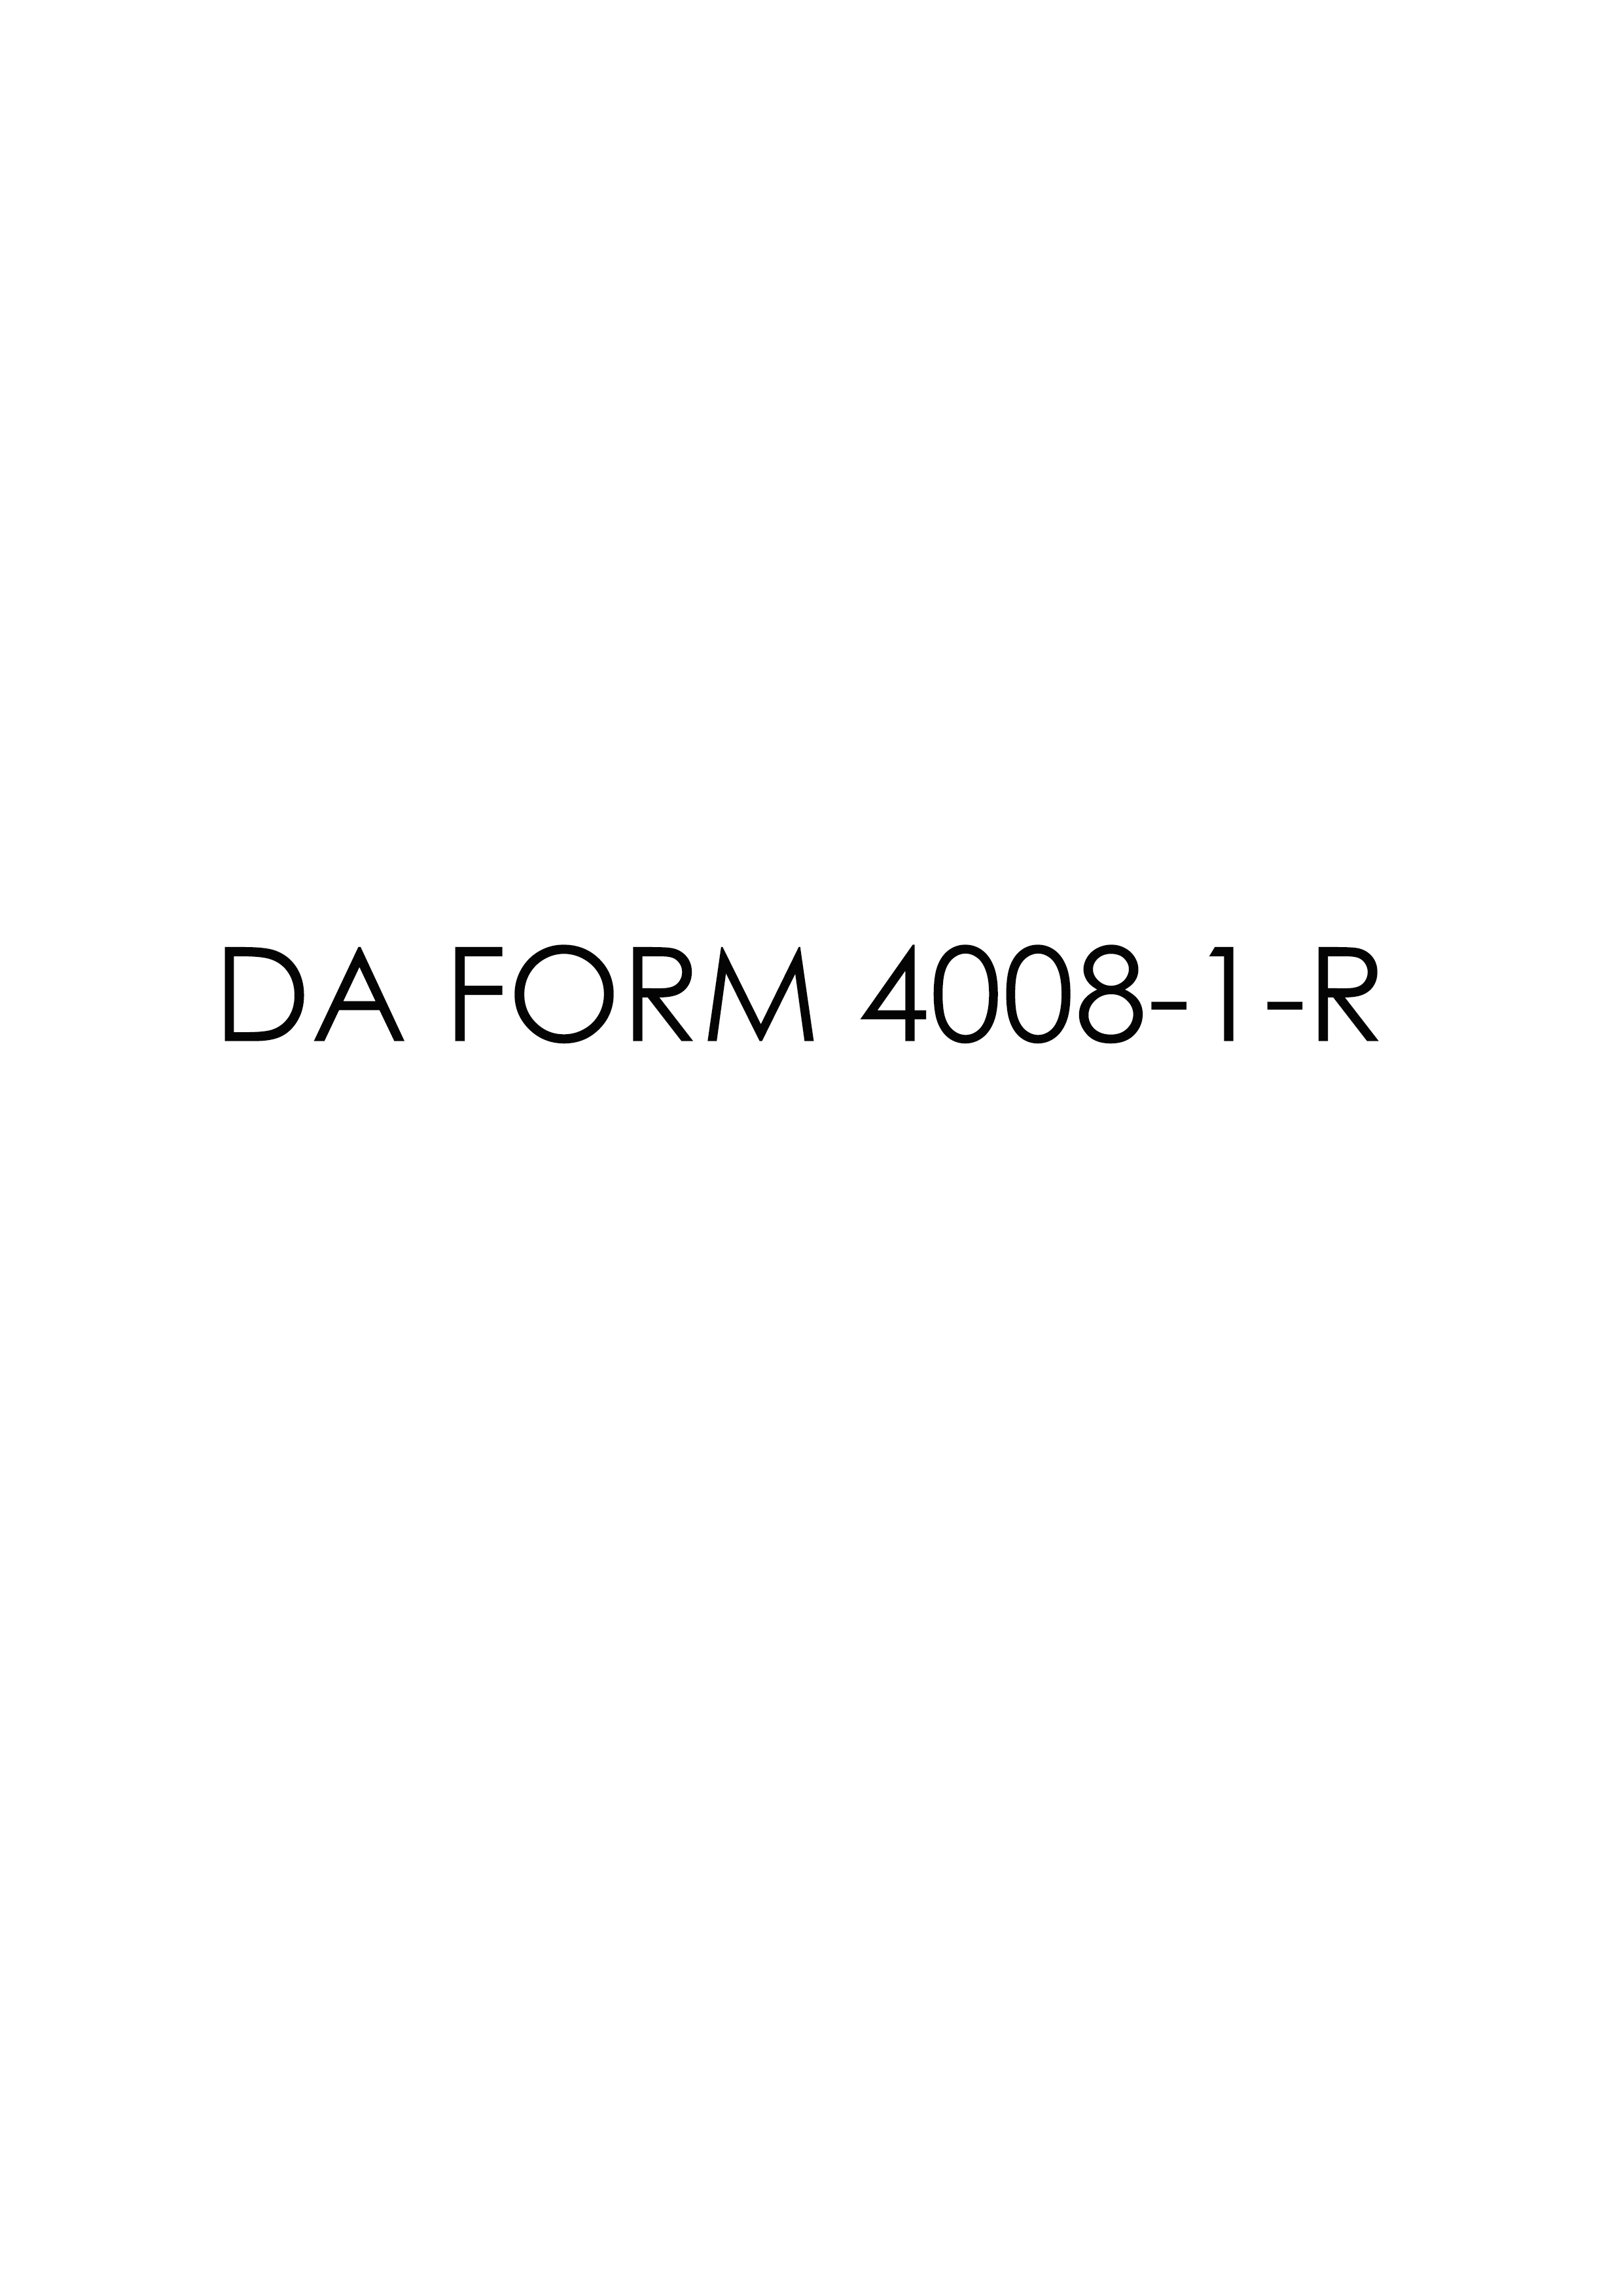 da Form 4008-1-R fillable